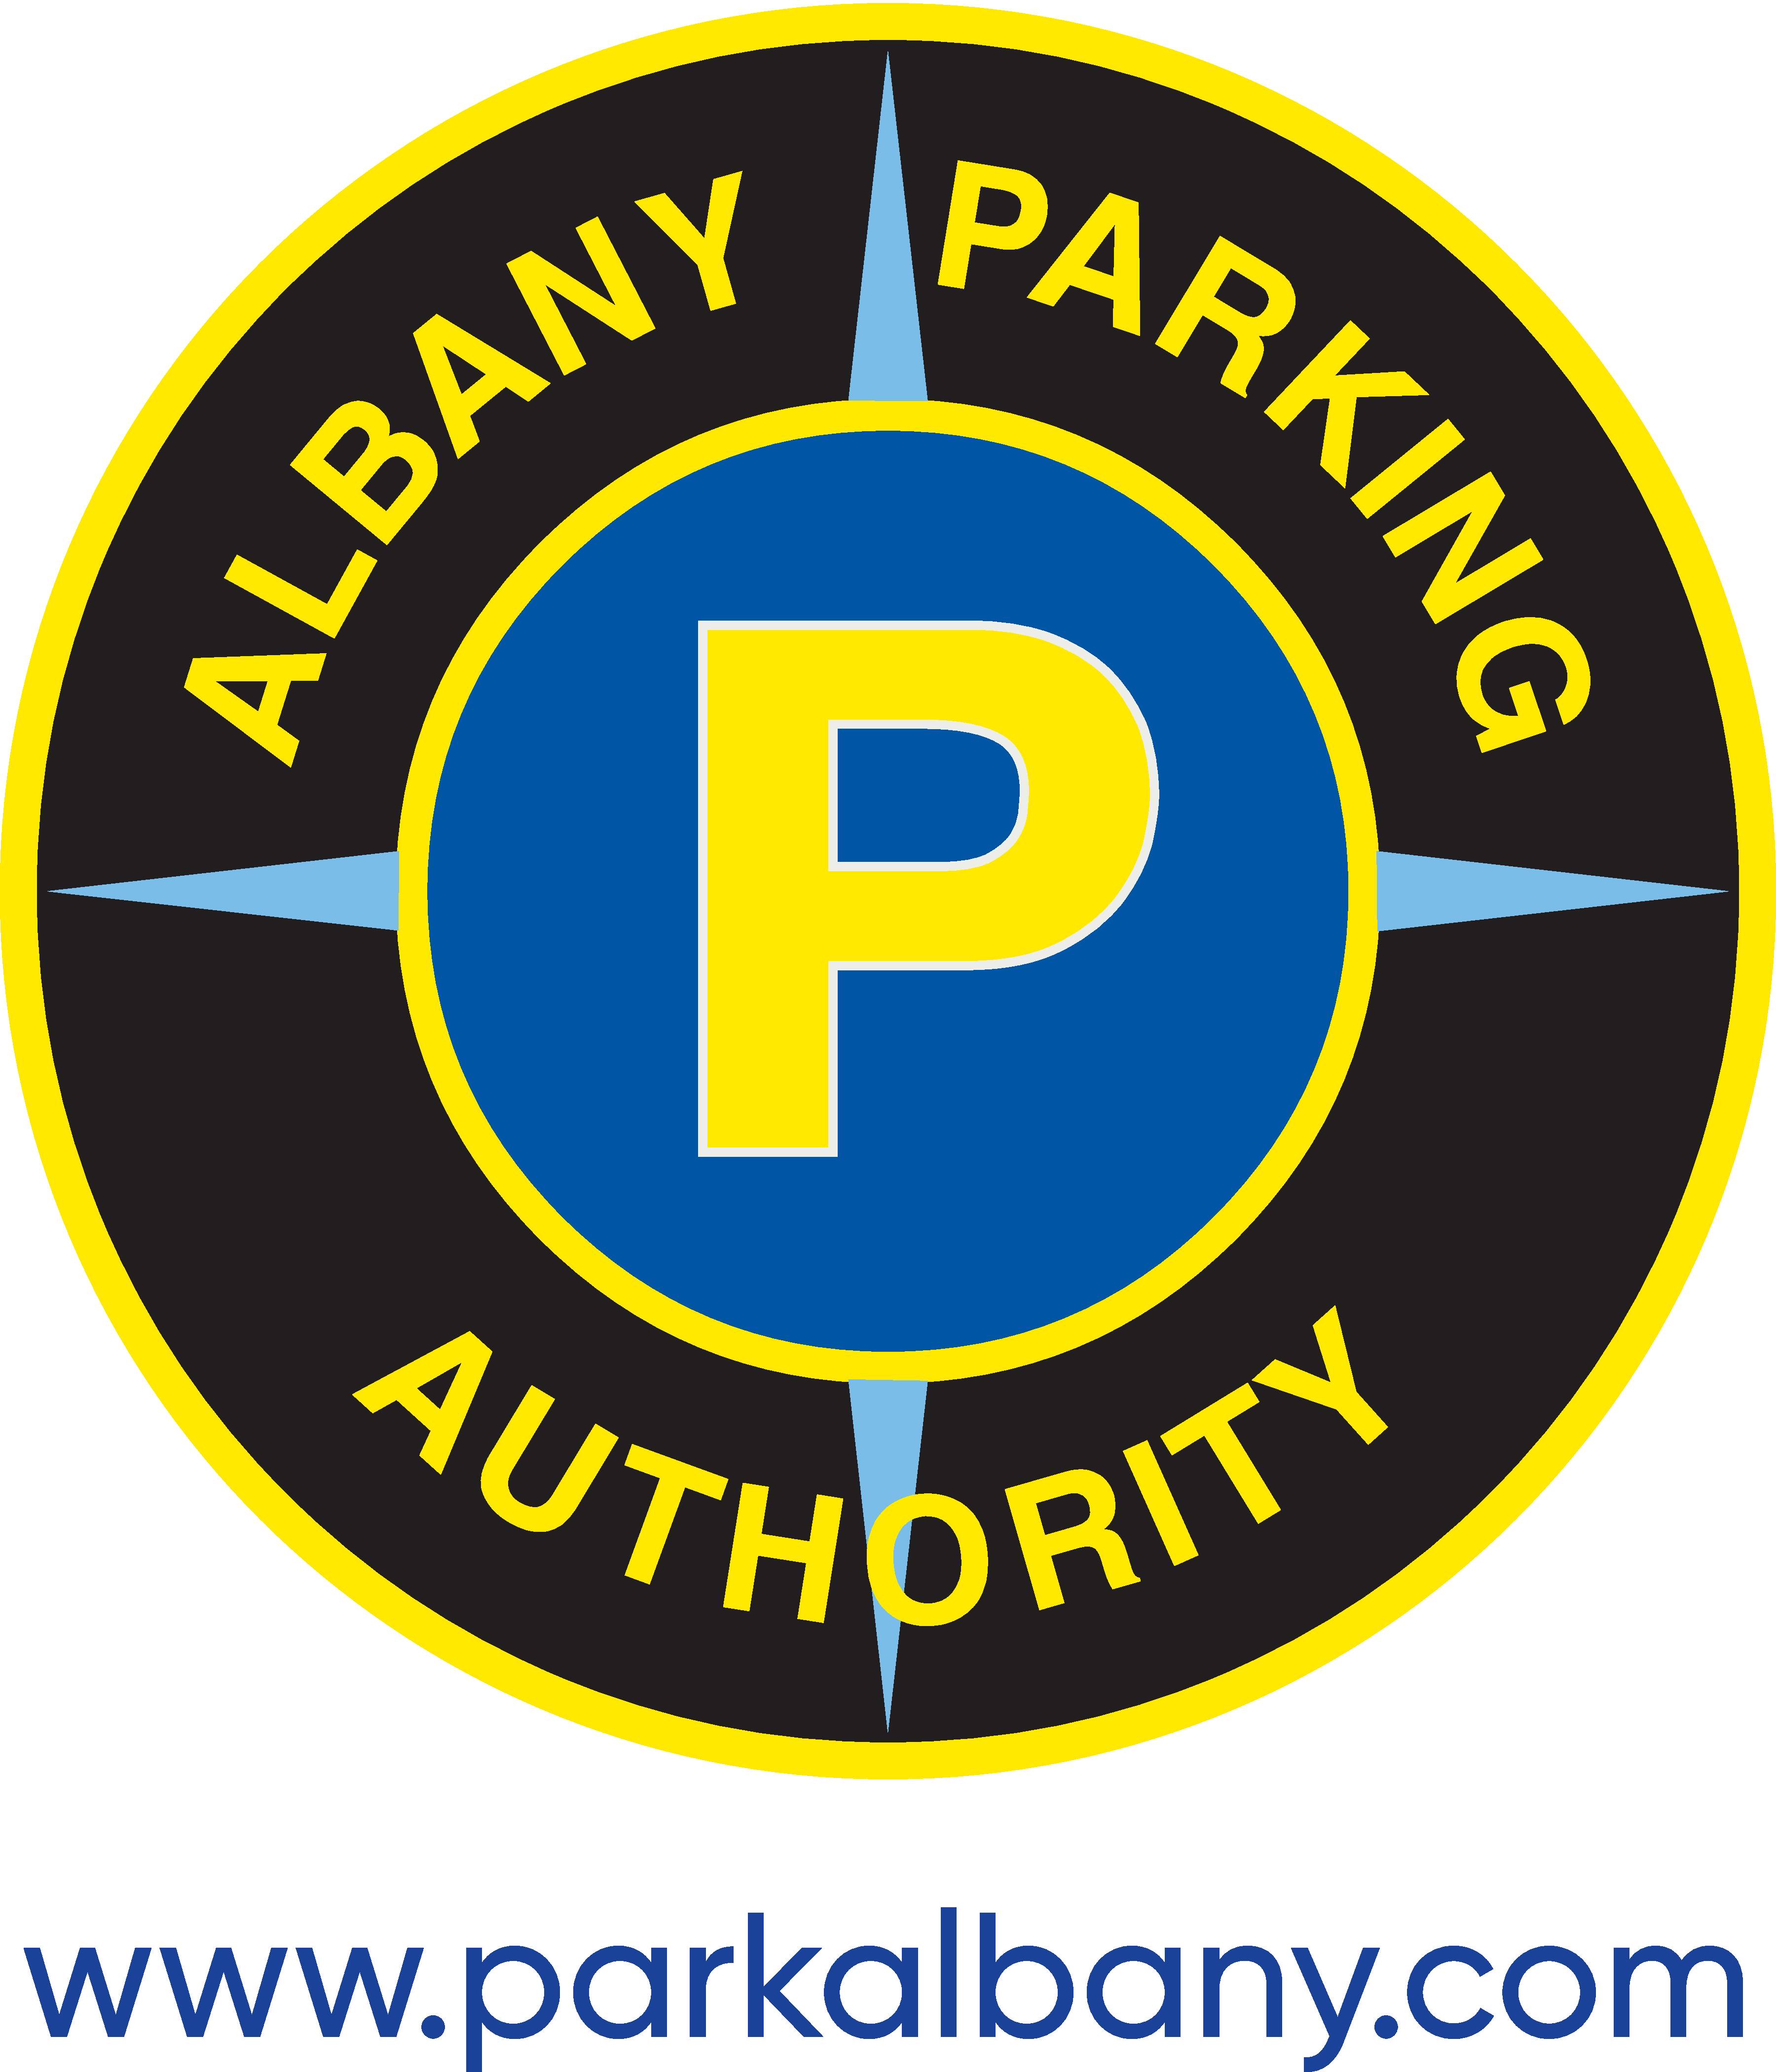 Albany Logo - APA albany parking authority logo Street (BID) Business